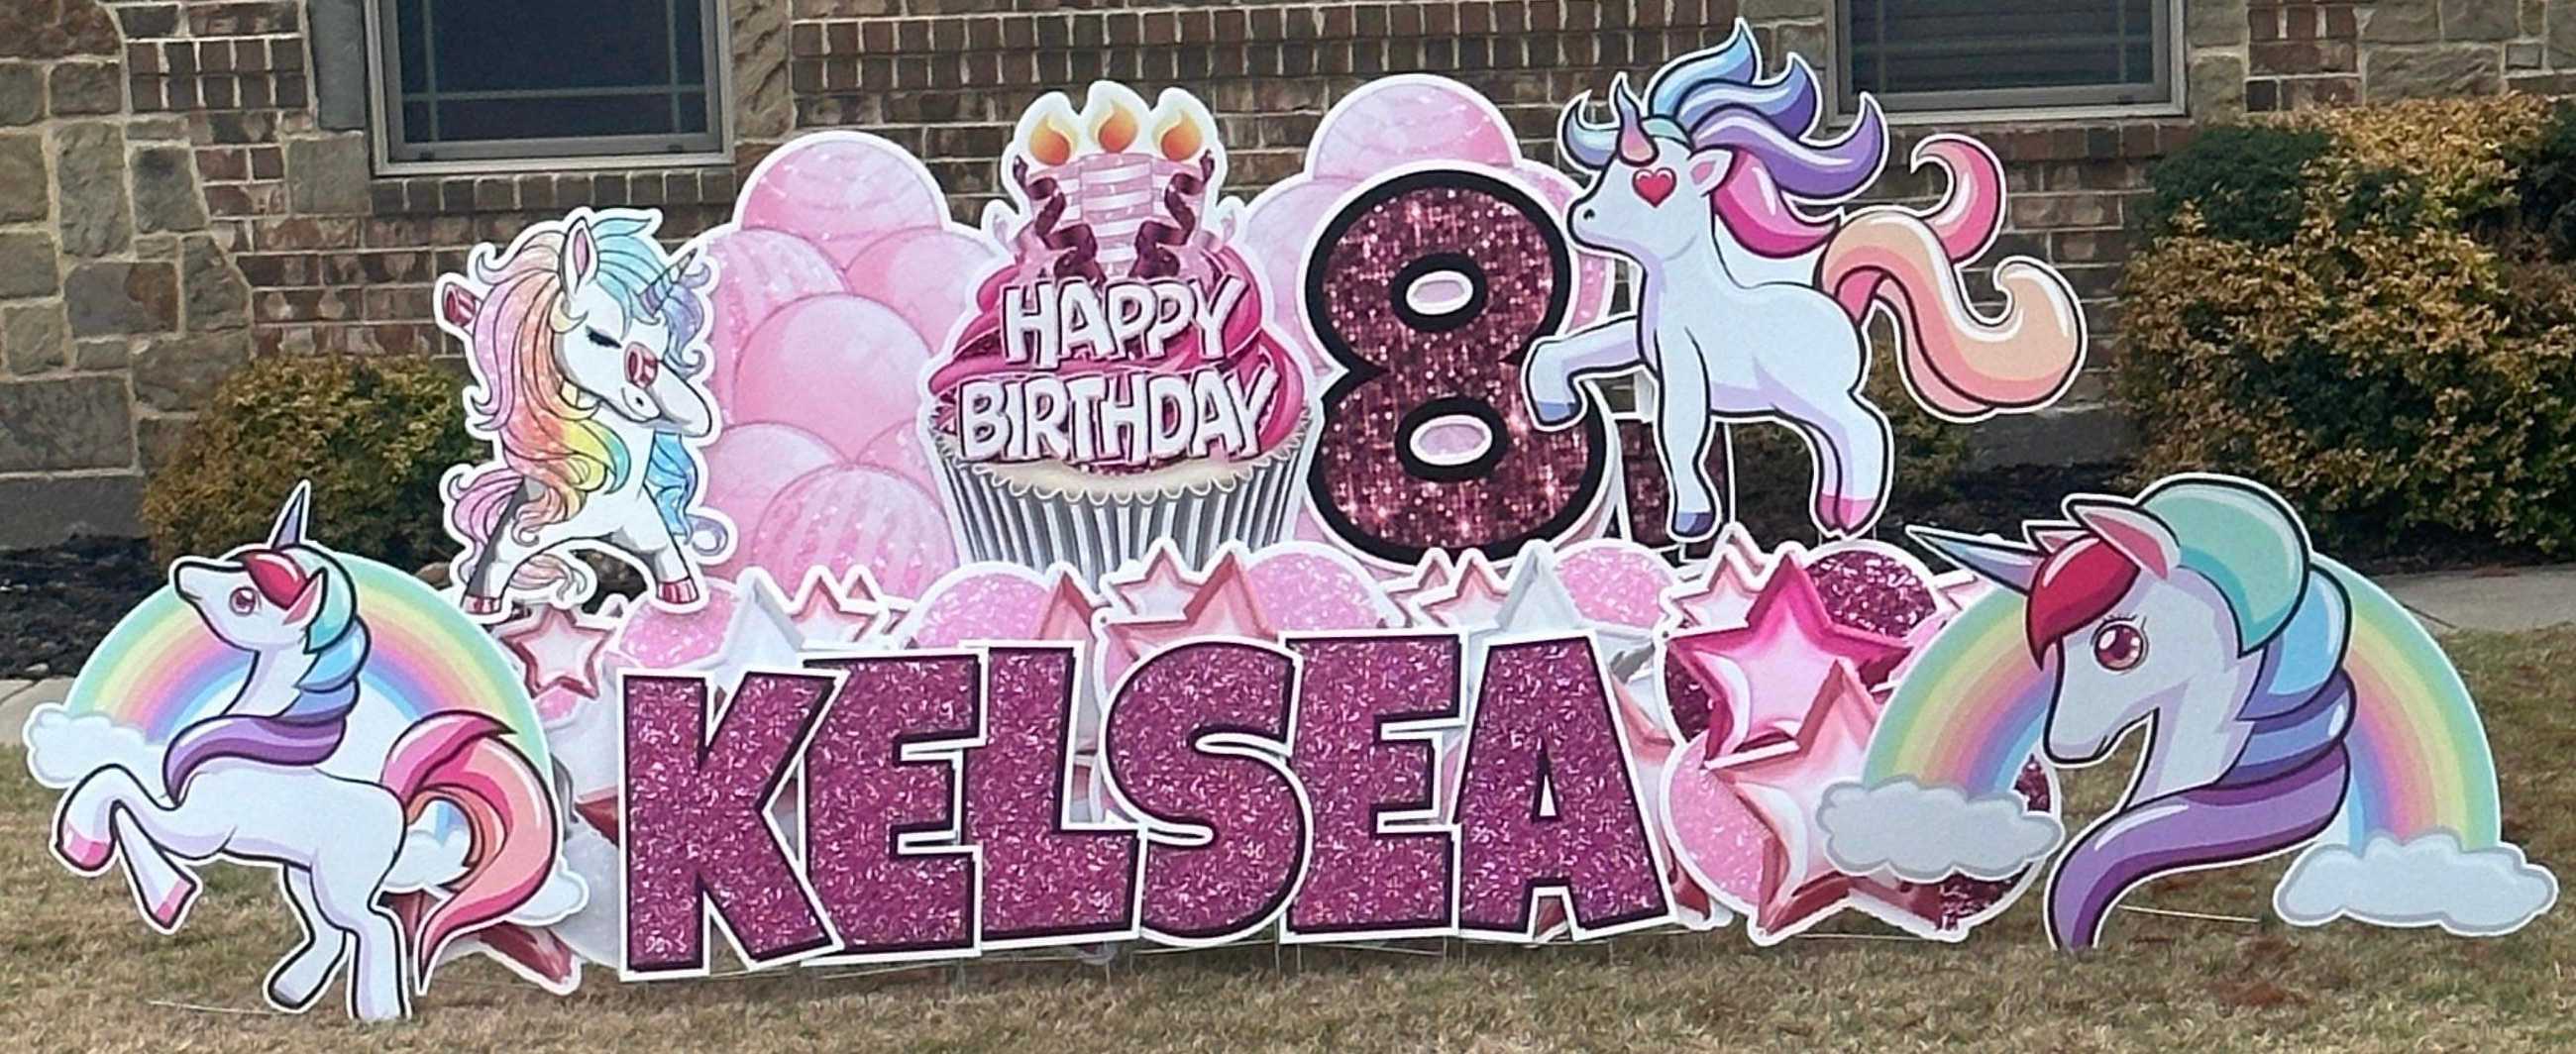 Yard card sign happy birthday kelsea 